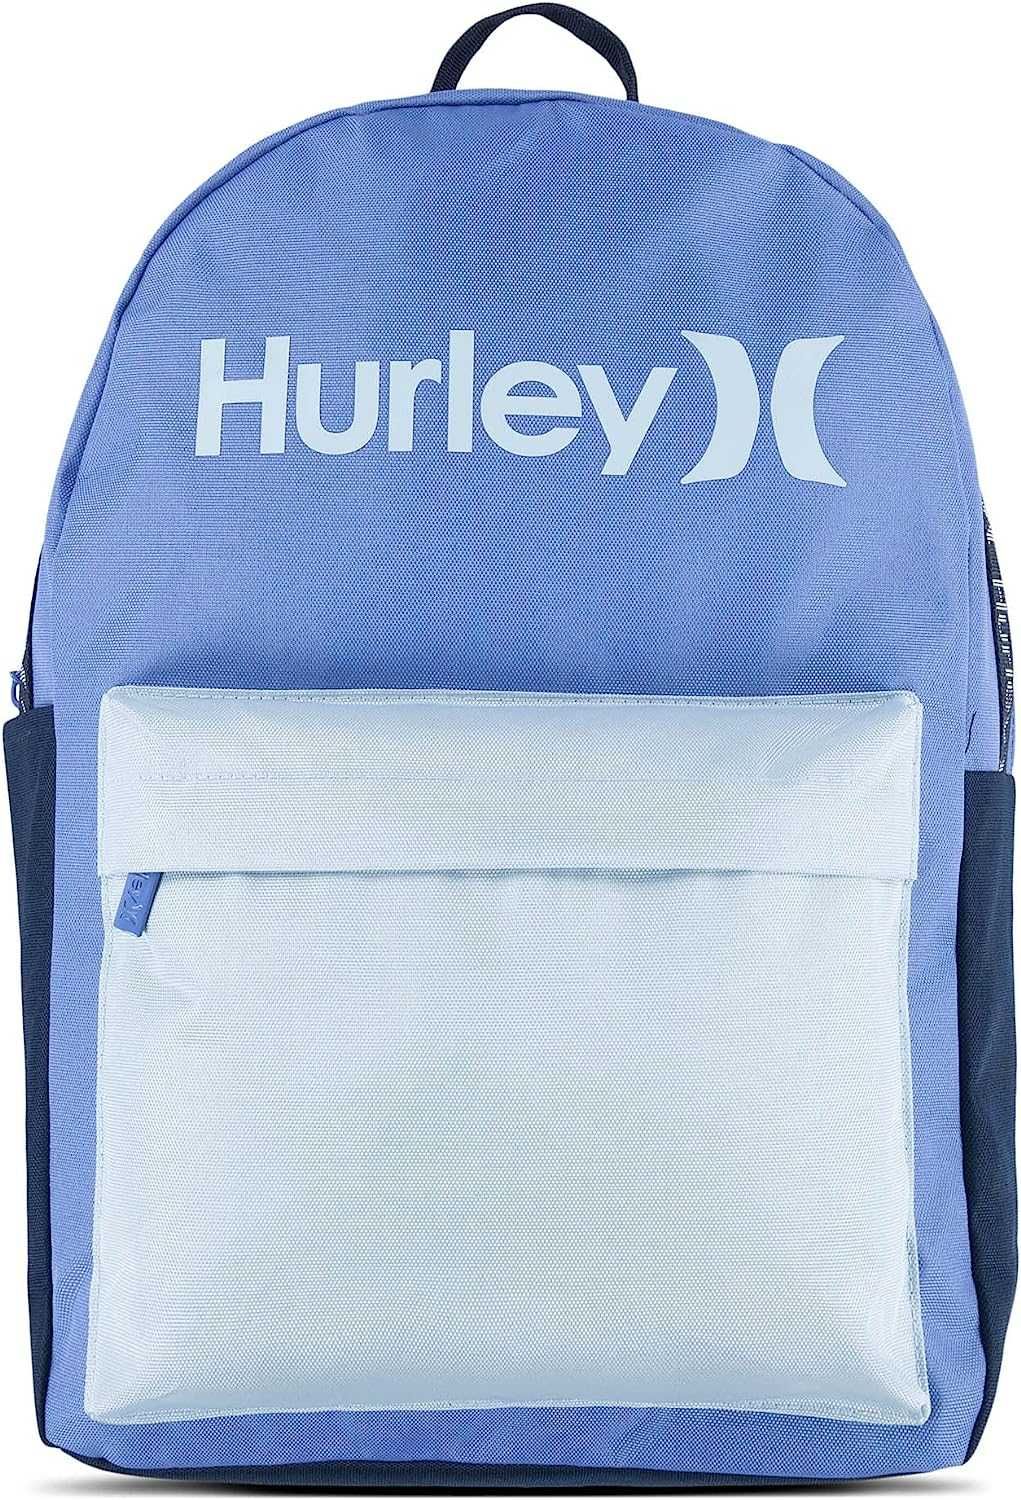 NOVA! Hurley Taping Daypack mochila adulto